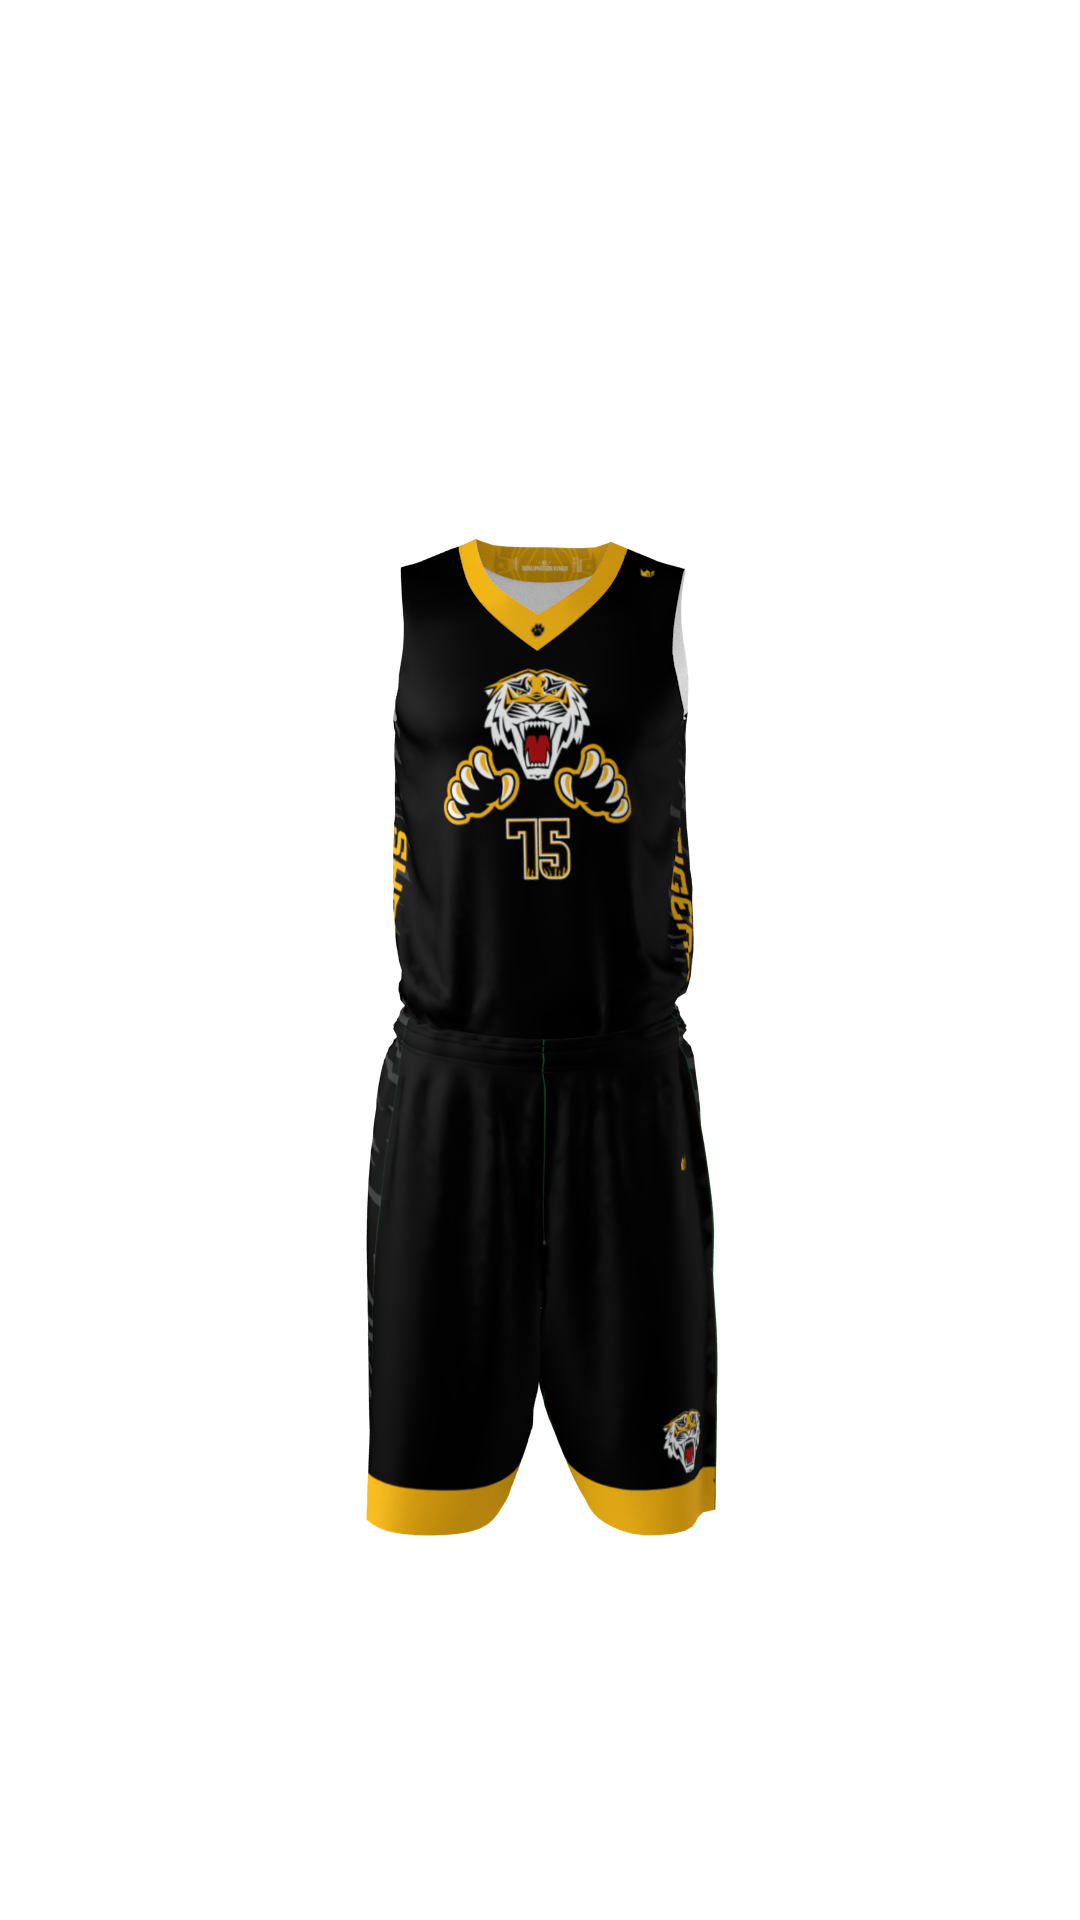 Tigers Basketball Uniform